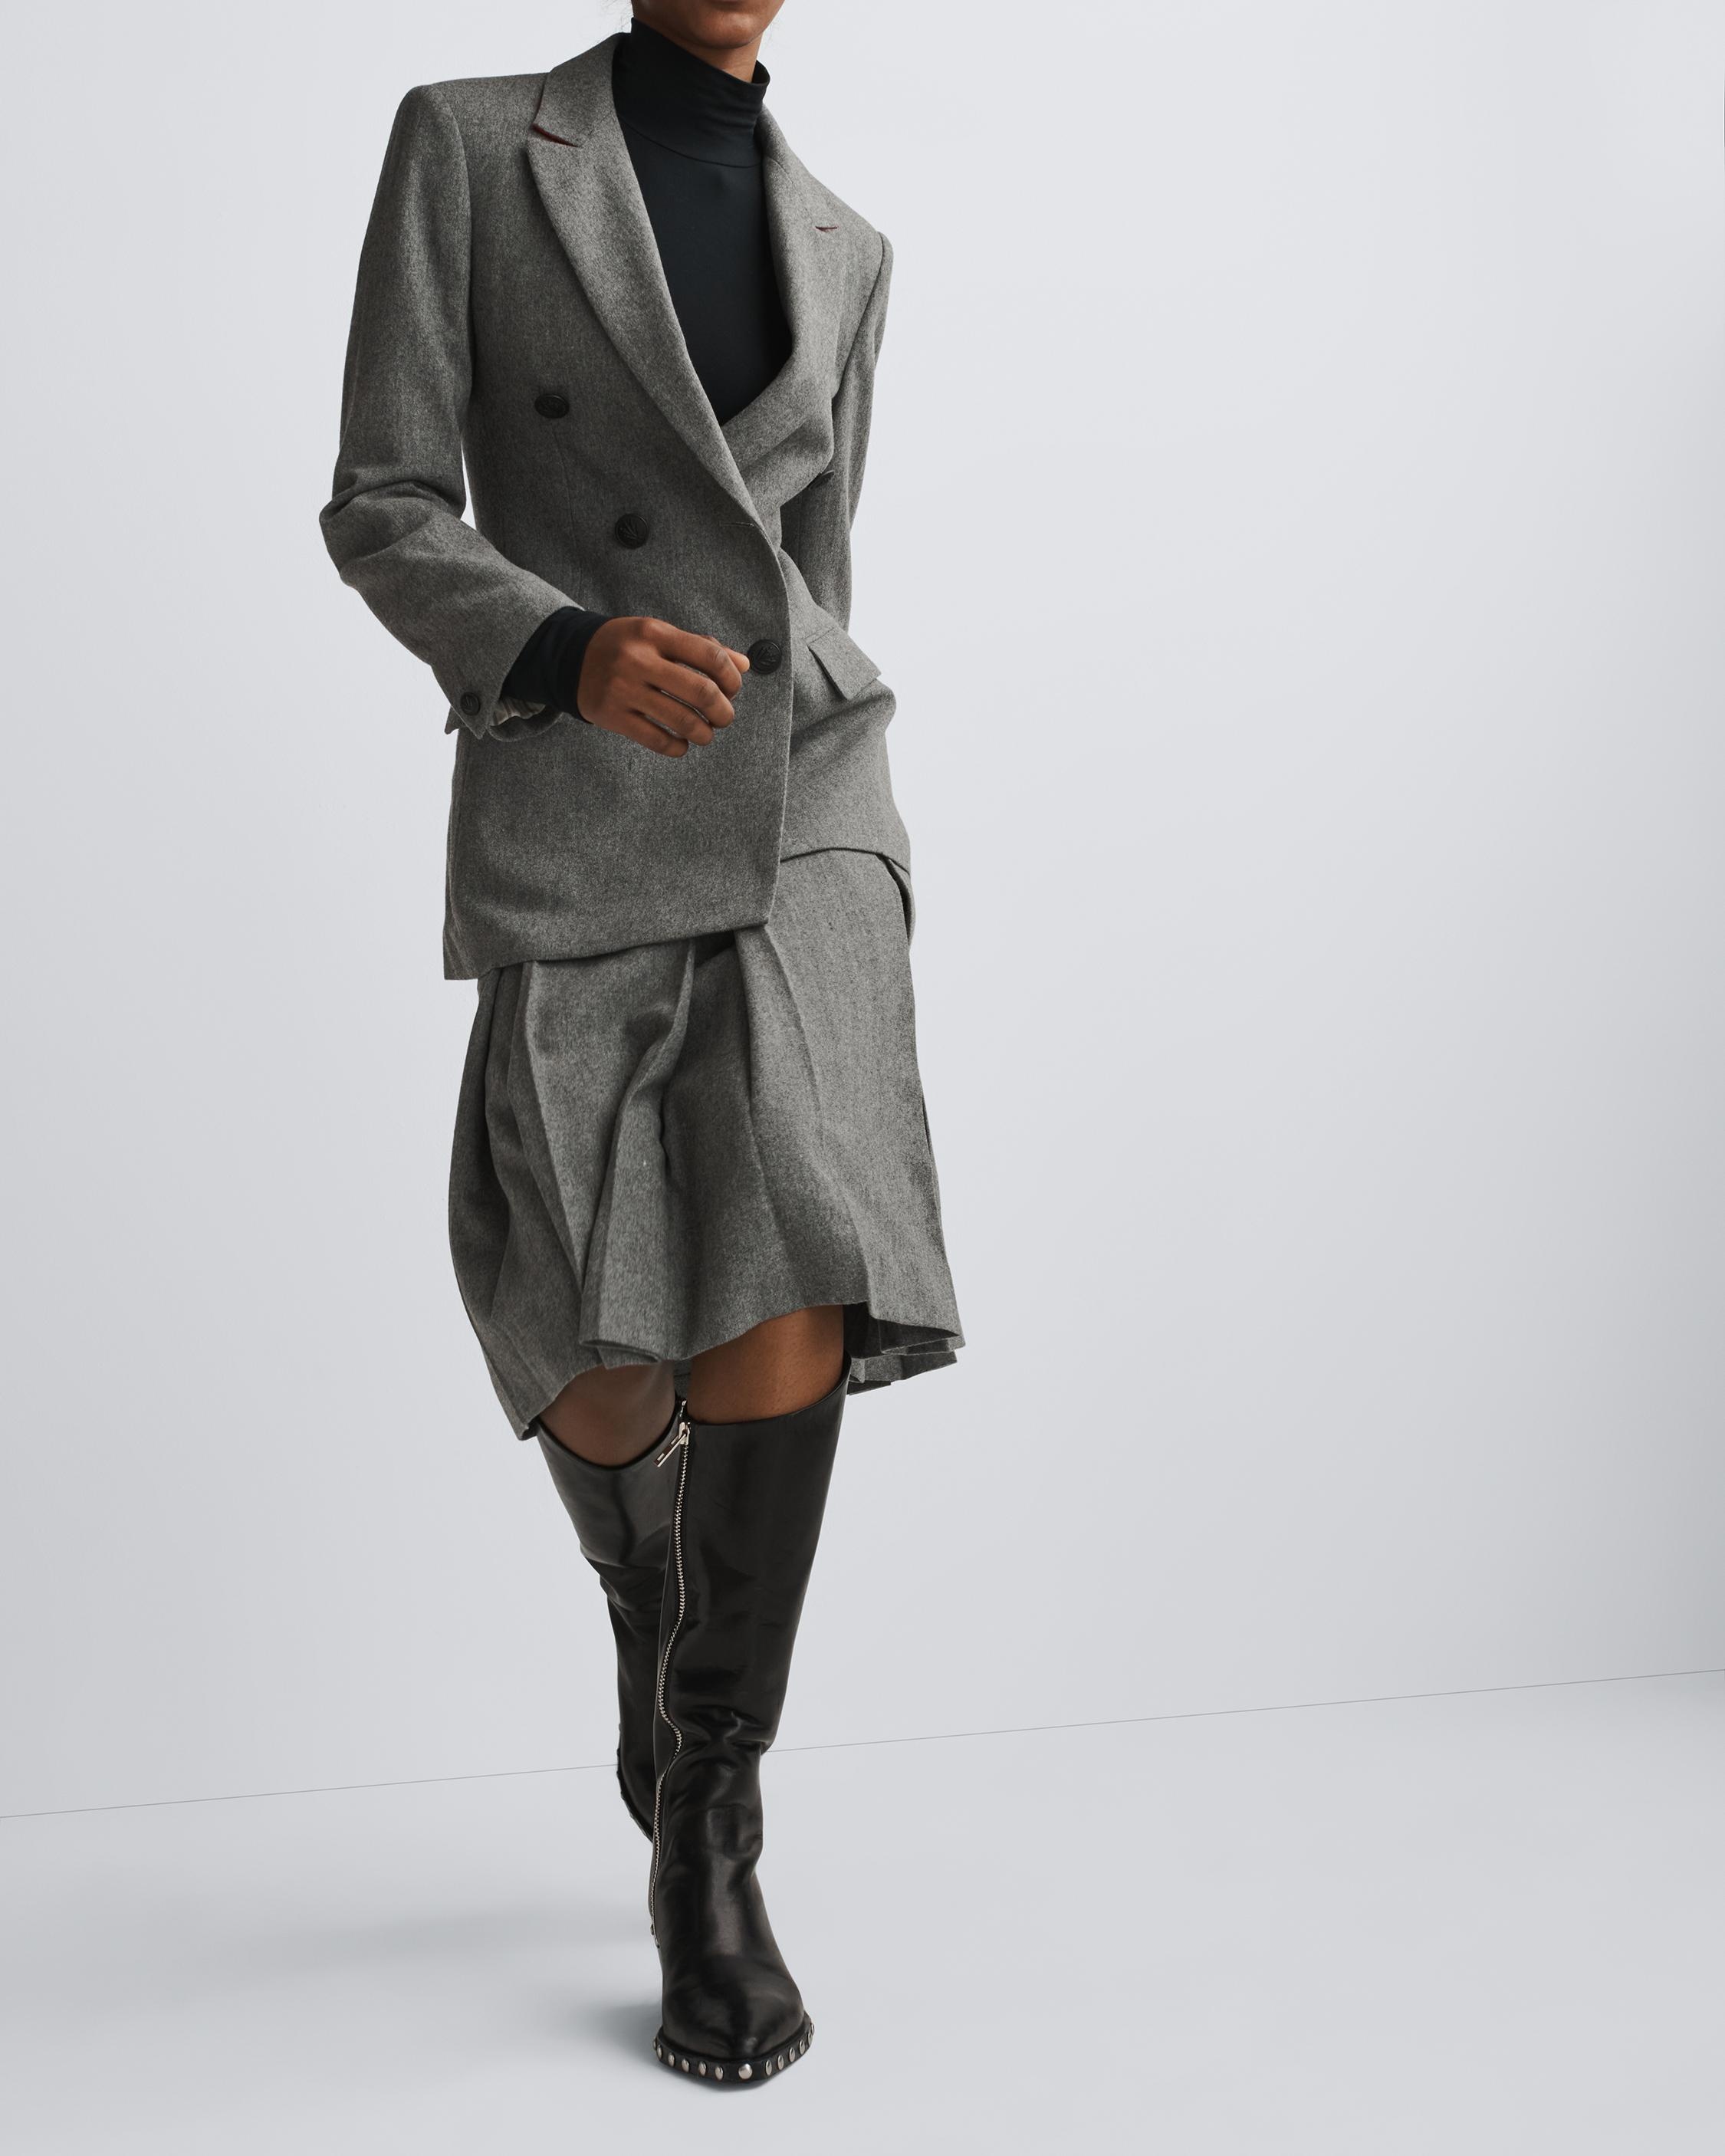 Garnet Italian Wool Skirt
Midi - 6